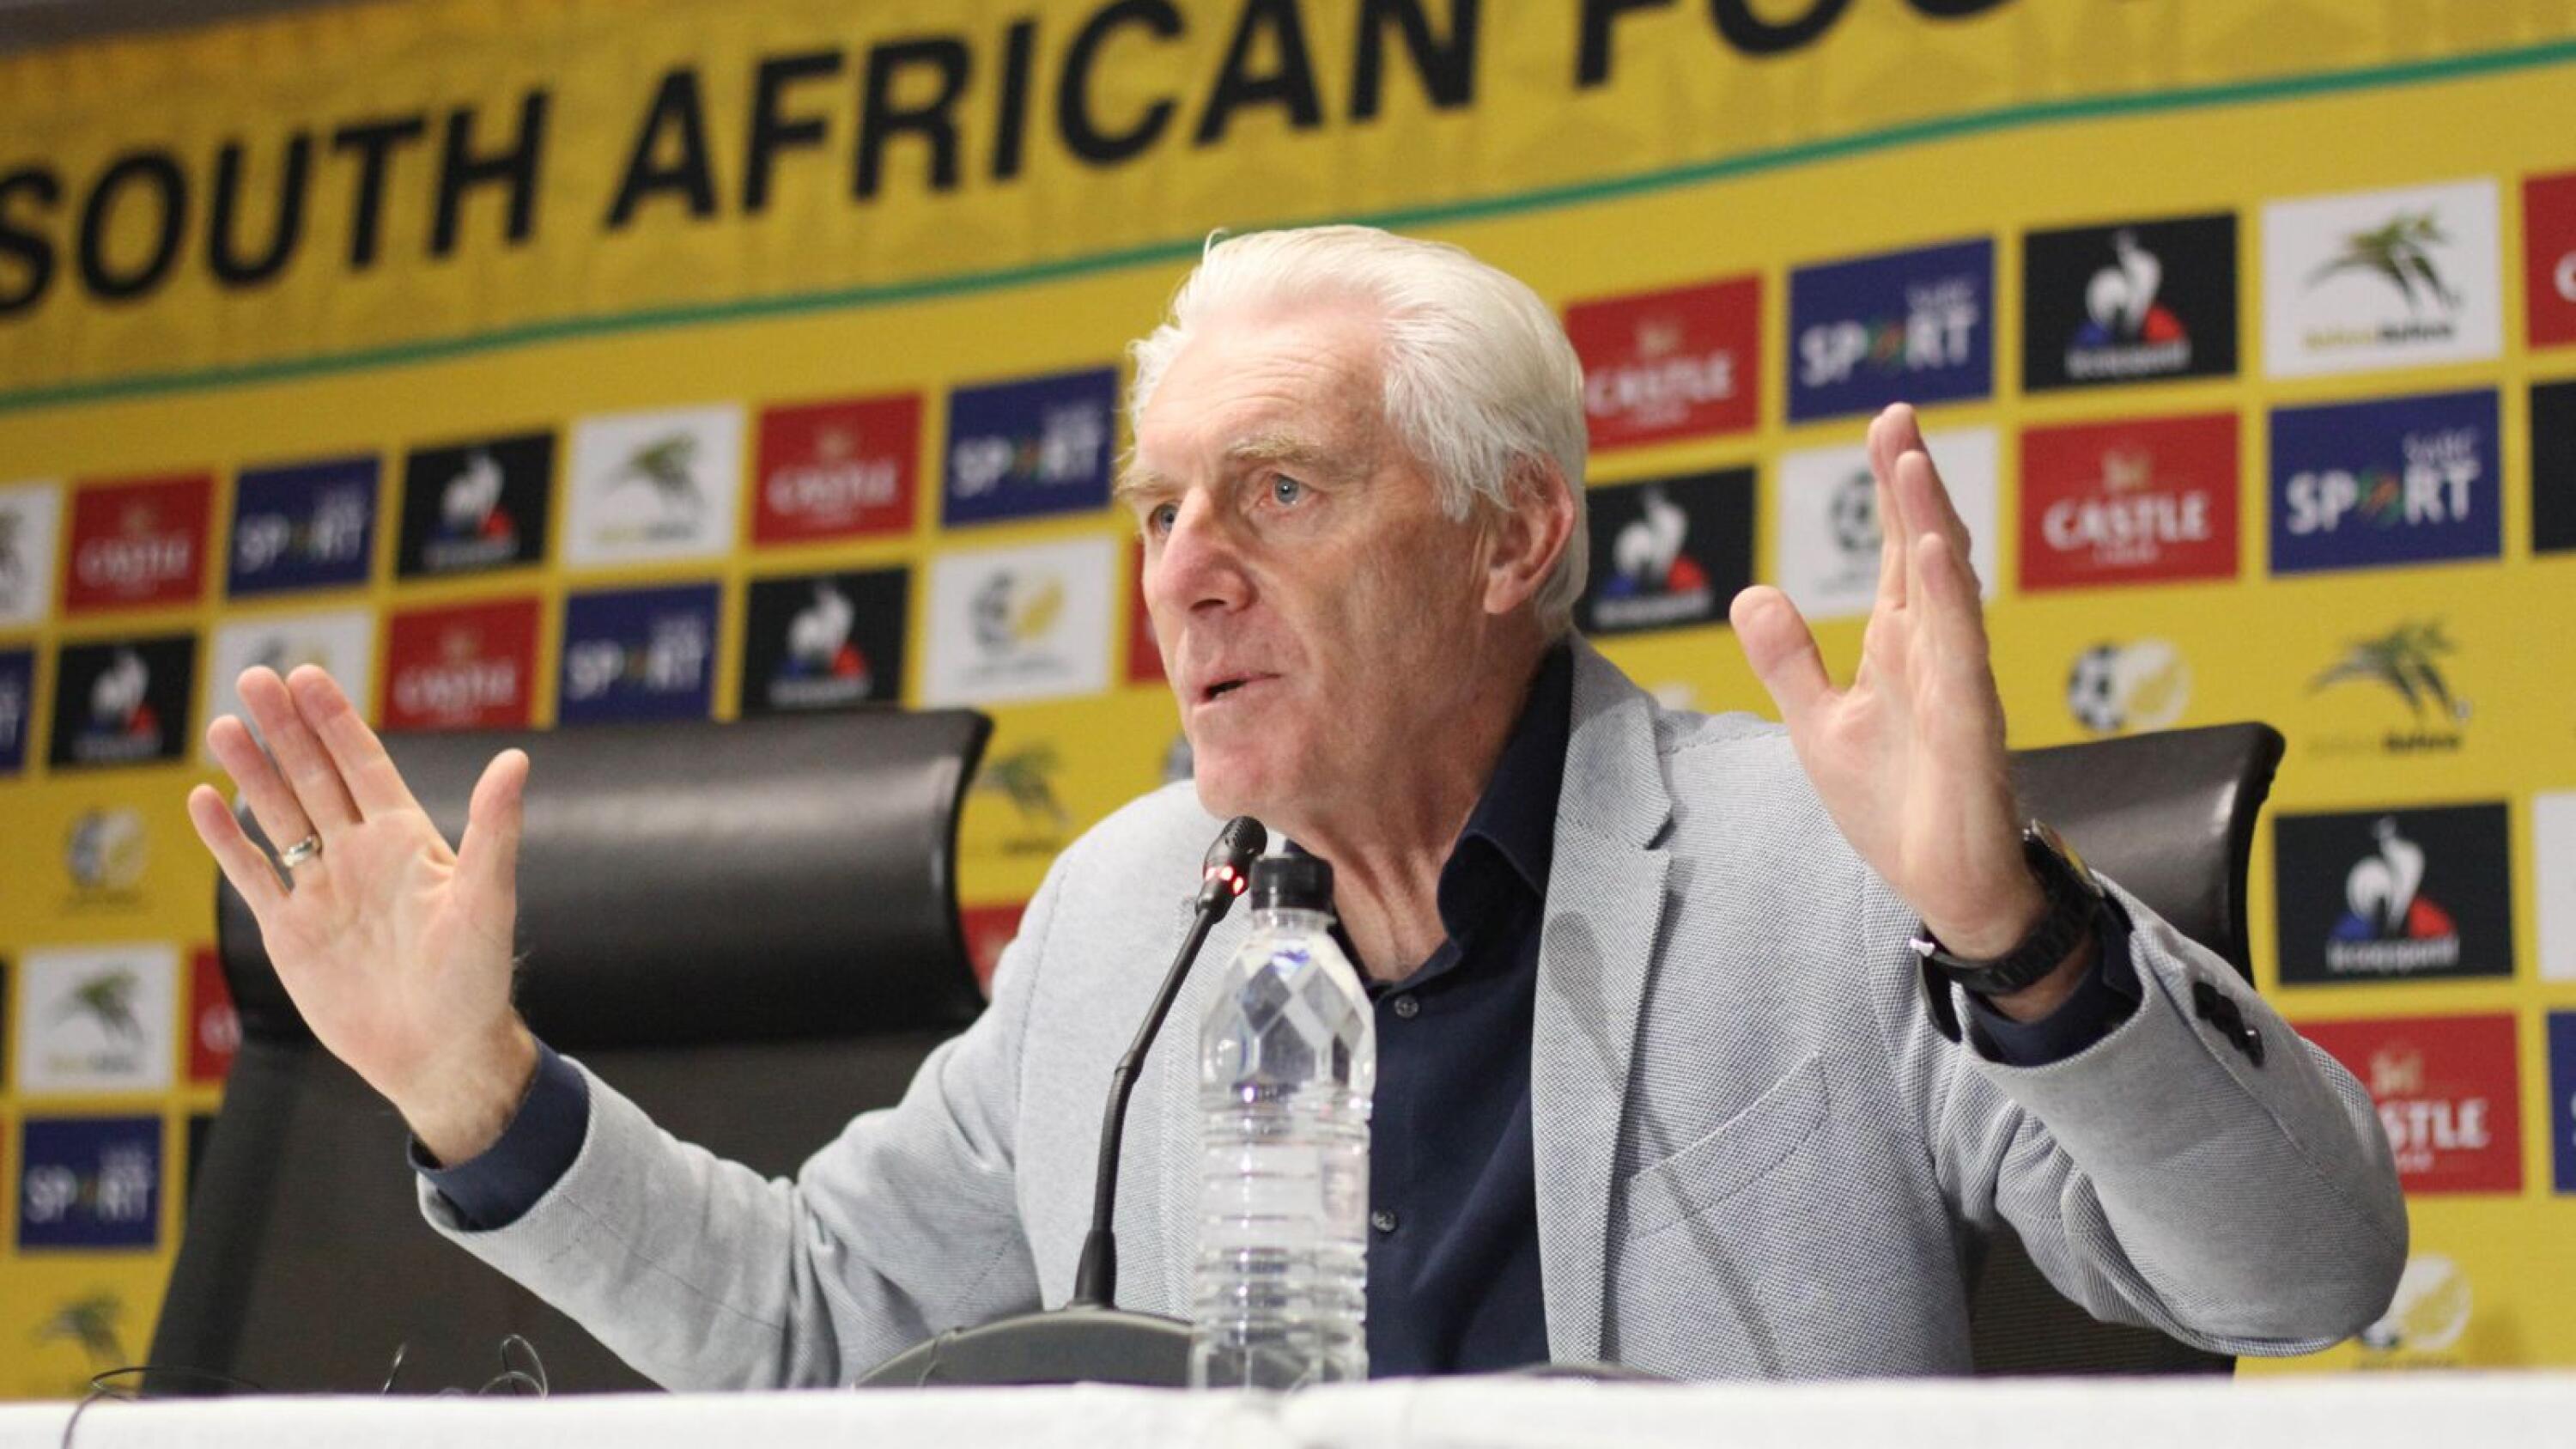 Bafana Bafana head coach Hugo Broos speaks during a press conference on Tuesday